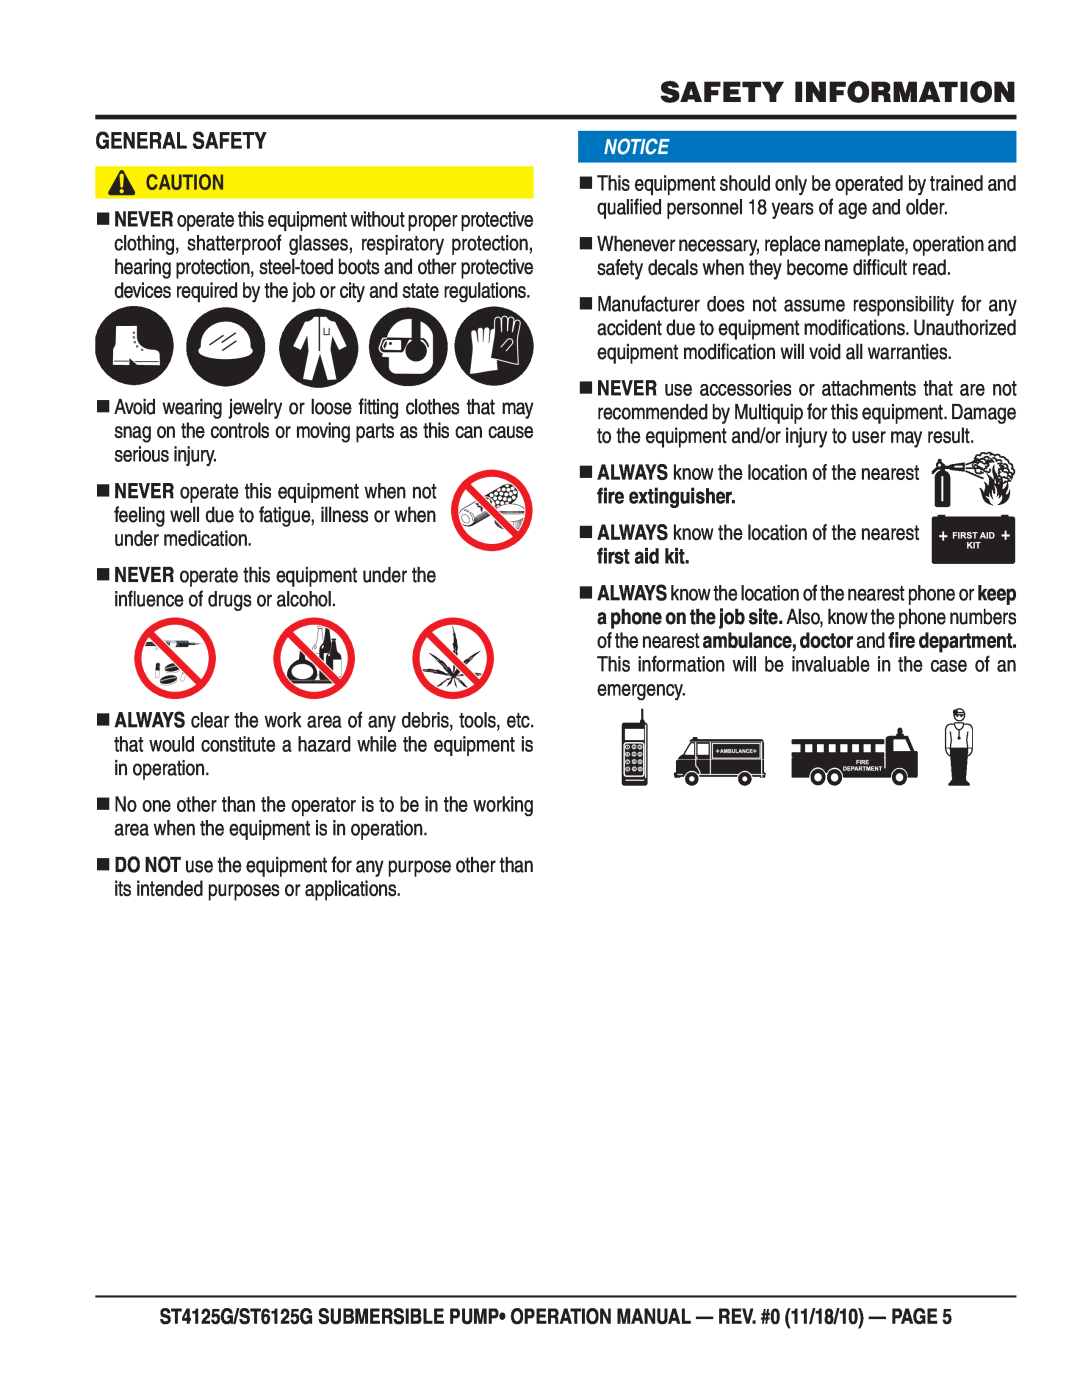 Multiquip ST4125G, ST6125G operation manual General Safety, ﬁre extinguisher, ﬁrst aid kit, Safety Information 